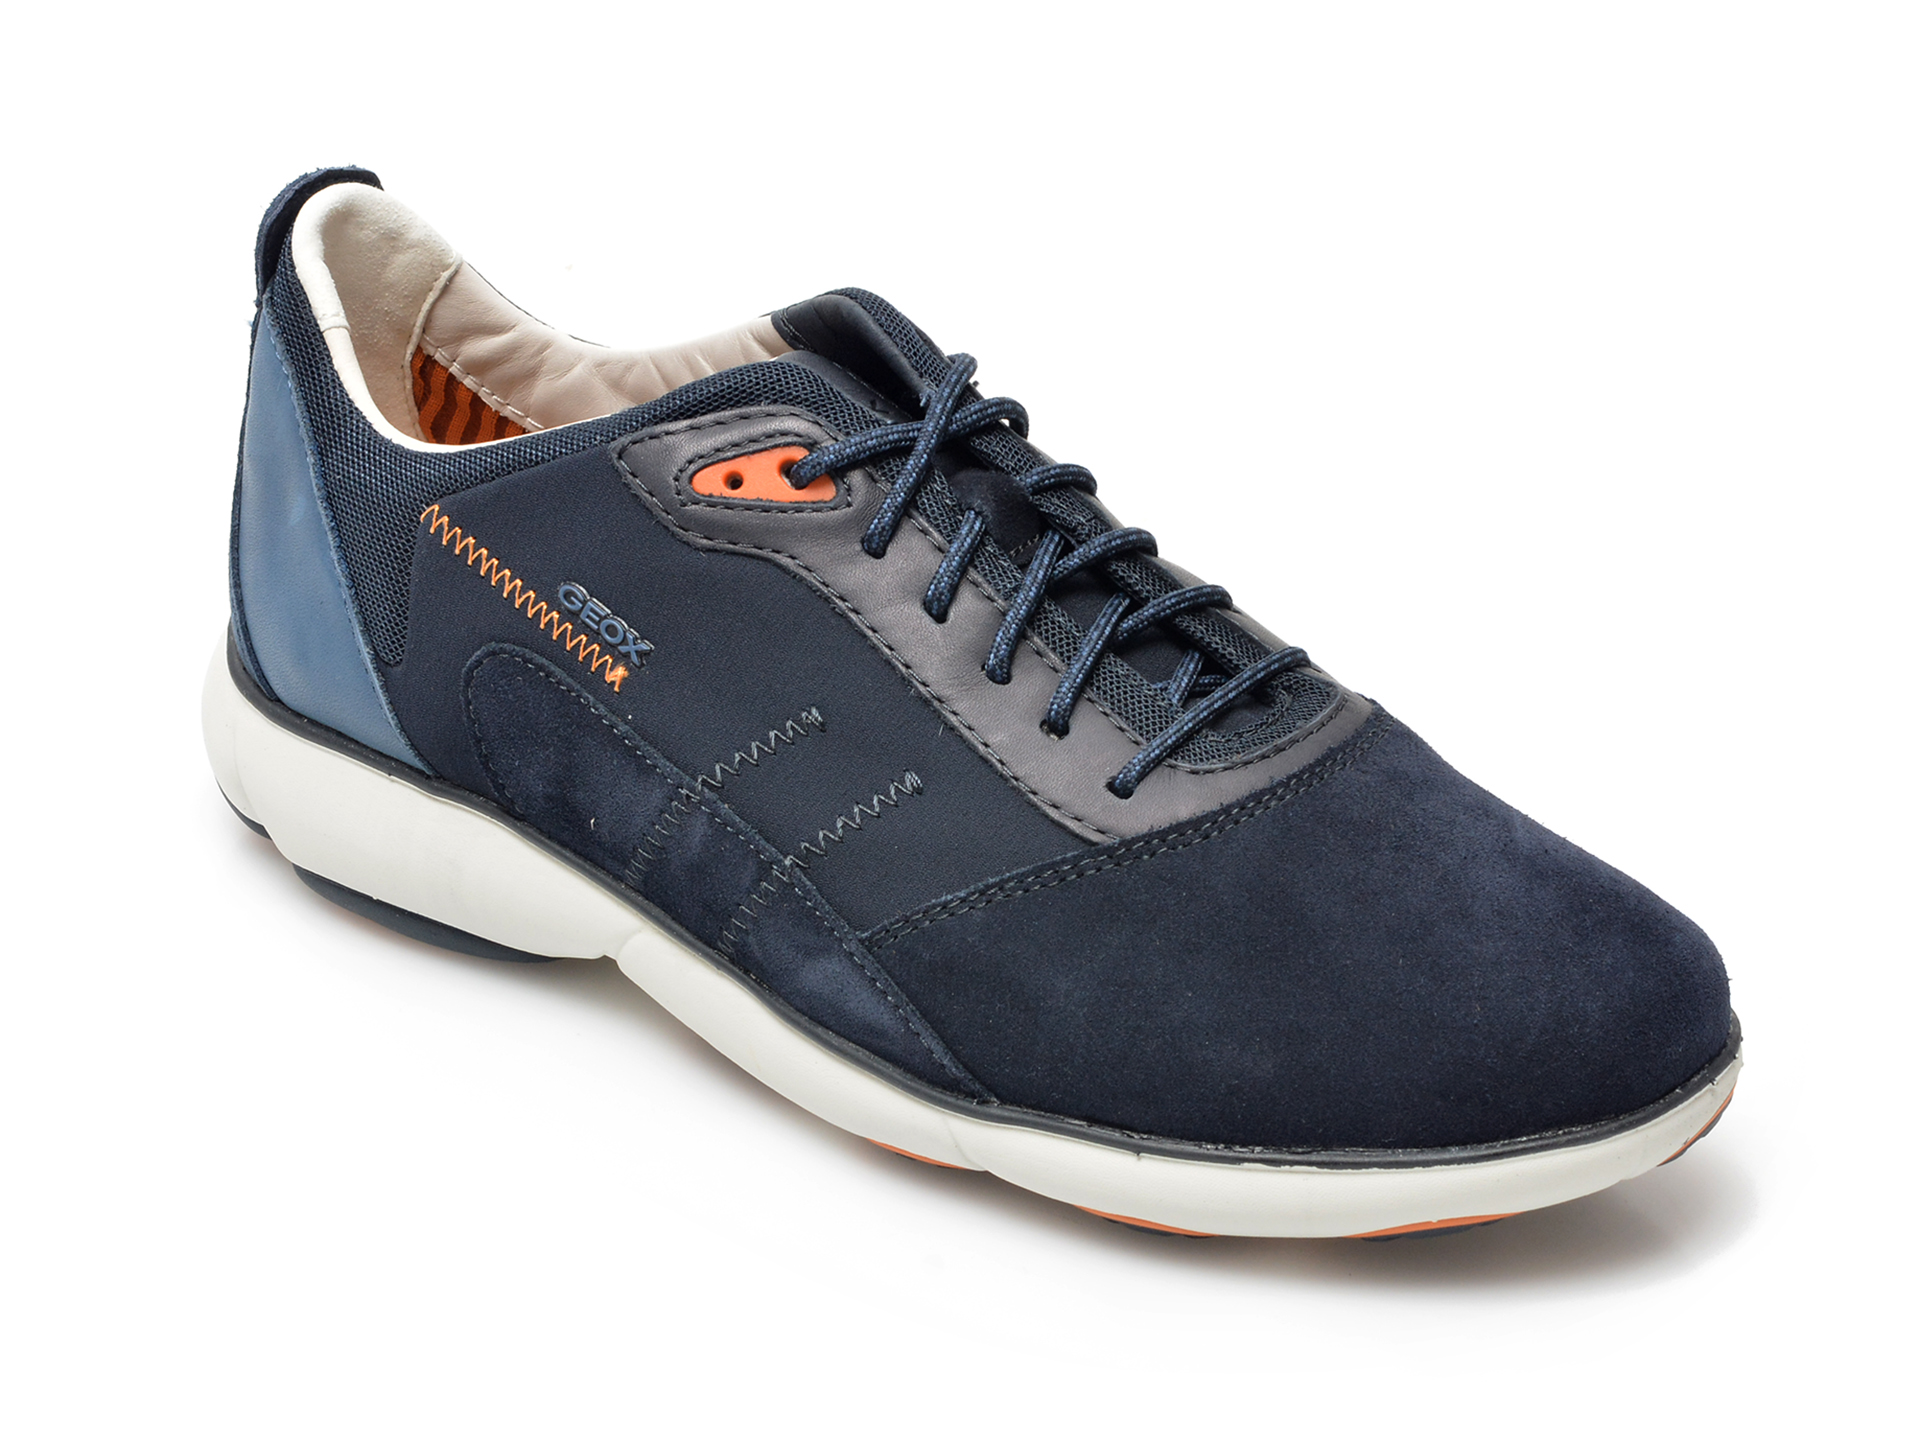 Pantofi GEOX bleumarin, U25D7C, din material textil si piele naturala Geox